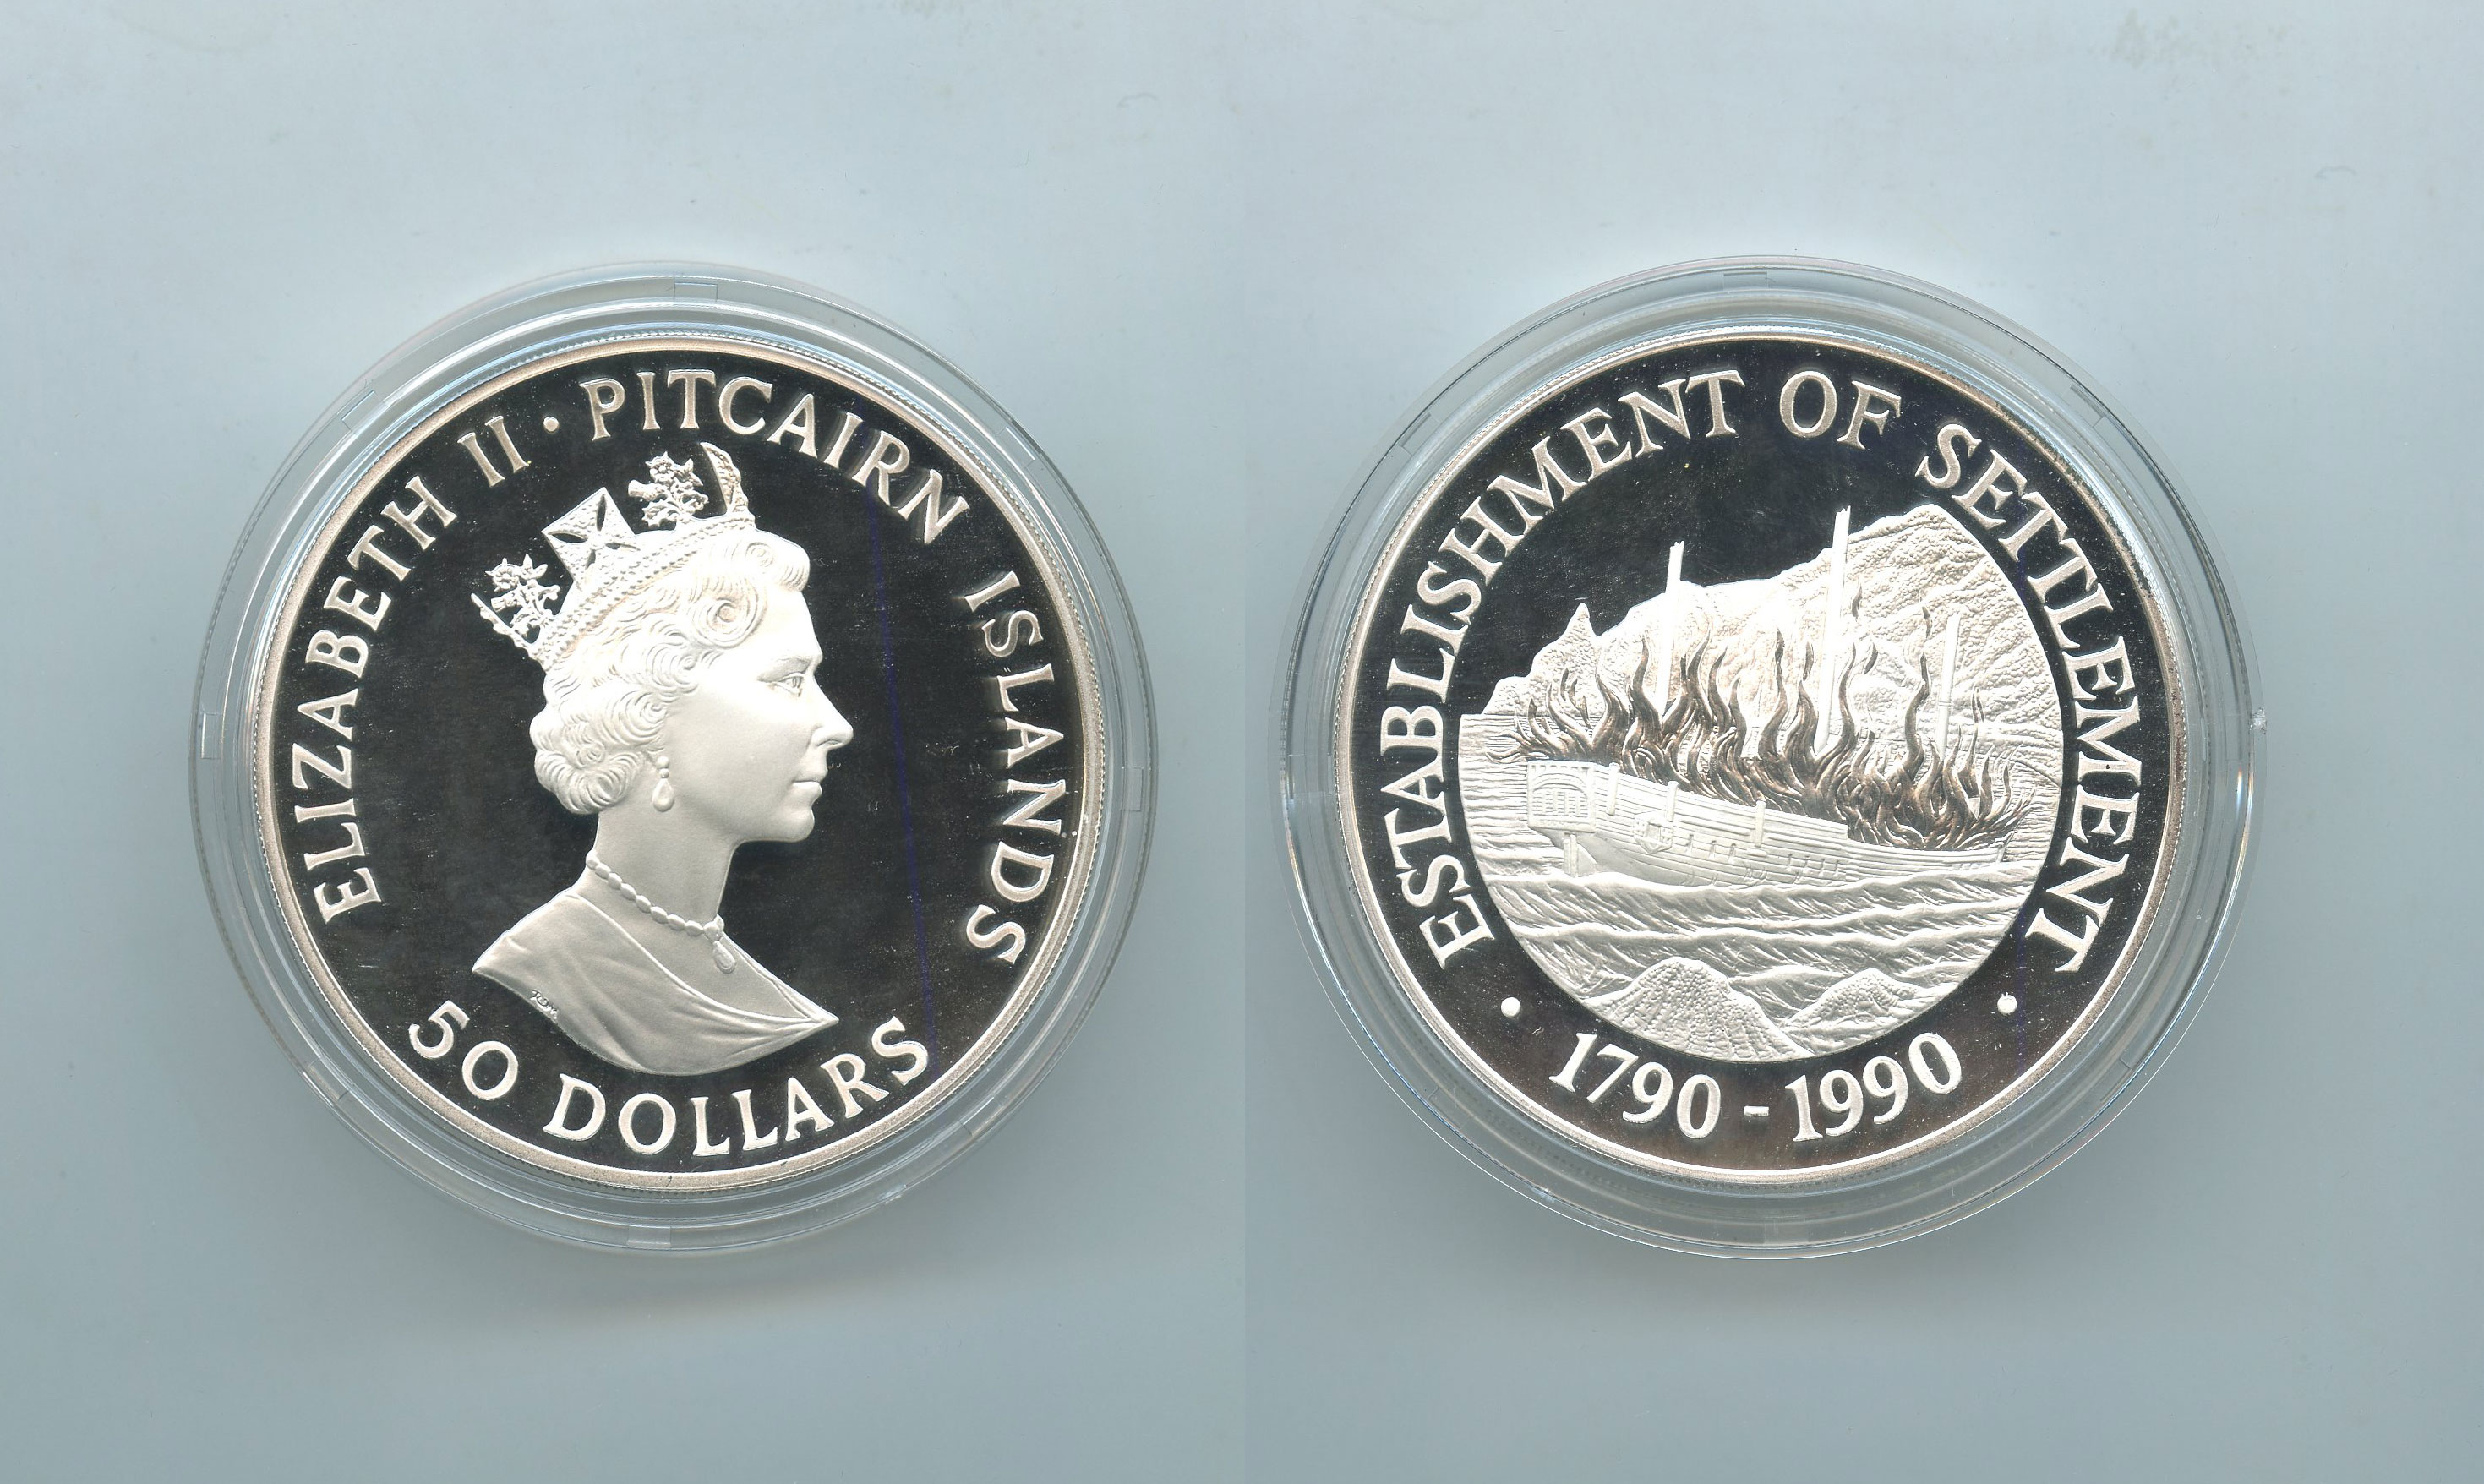 PITCAIRN ISLANDS, Elizabeth II, 50 Dollars 1990 "Establishment of settlement 1790-1990"